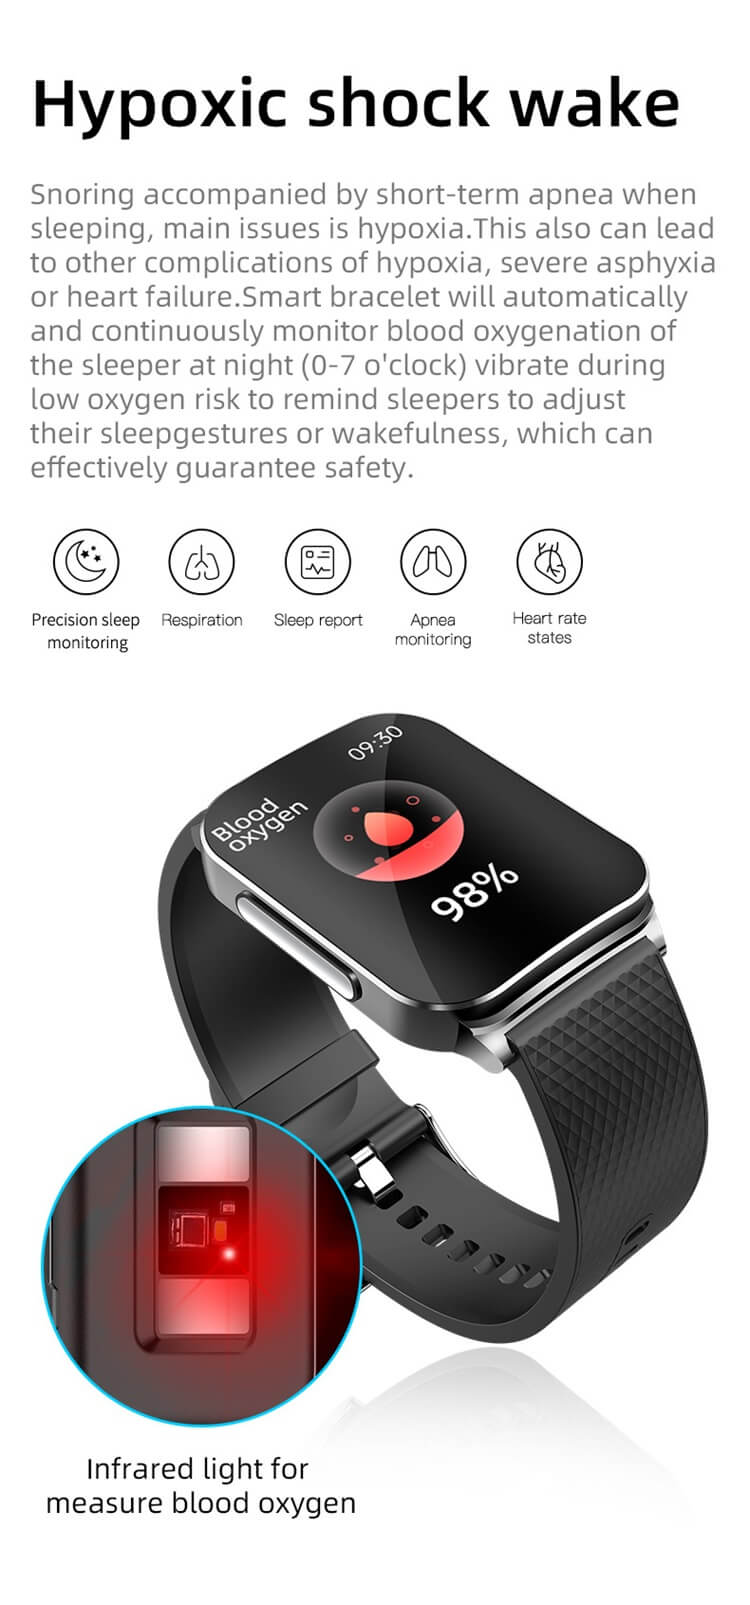 EP03 ECG PTT Blood Glucose Heart Rate Blood Pressure Body Temperature Blood Oxygen 24 Hours Dynamic Smart Watch-Shenzhen Shengye Technology Co.,Ltd